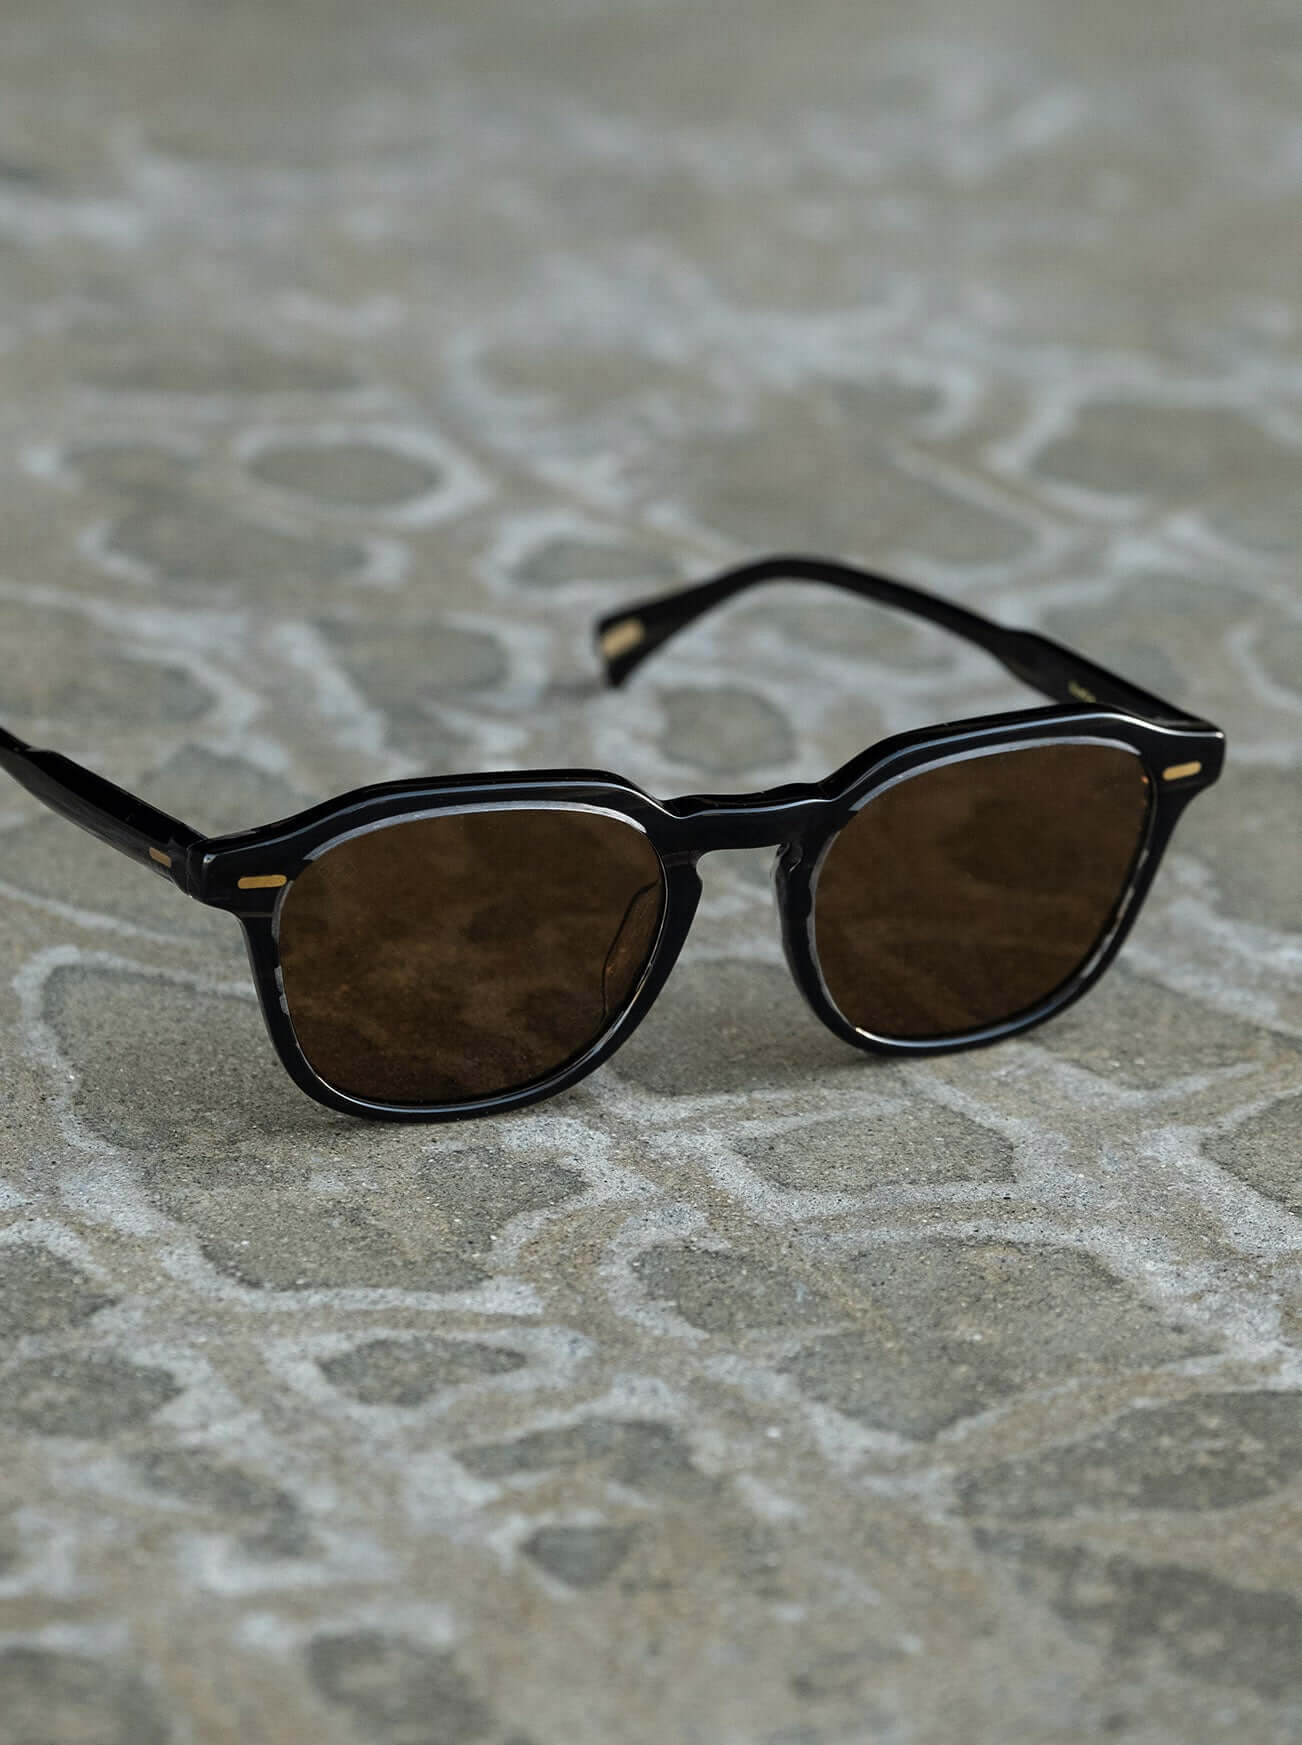 RAEN Clyve Sunglasses in Espresso Tortoise / Green Polarized